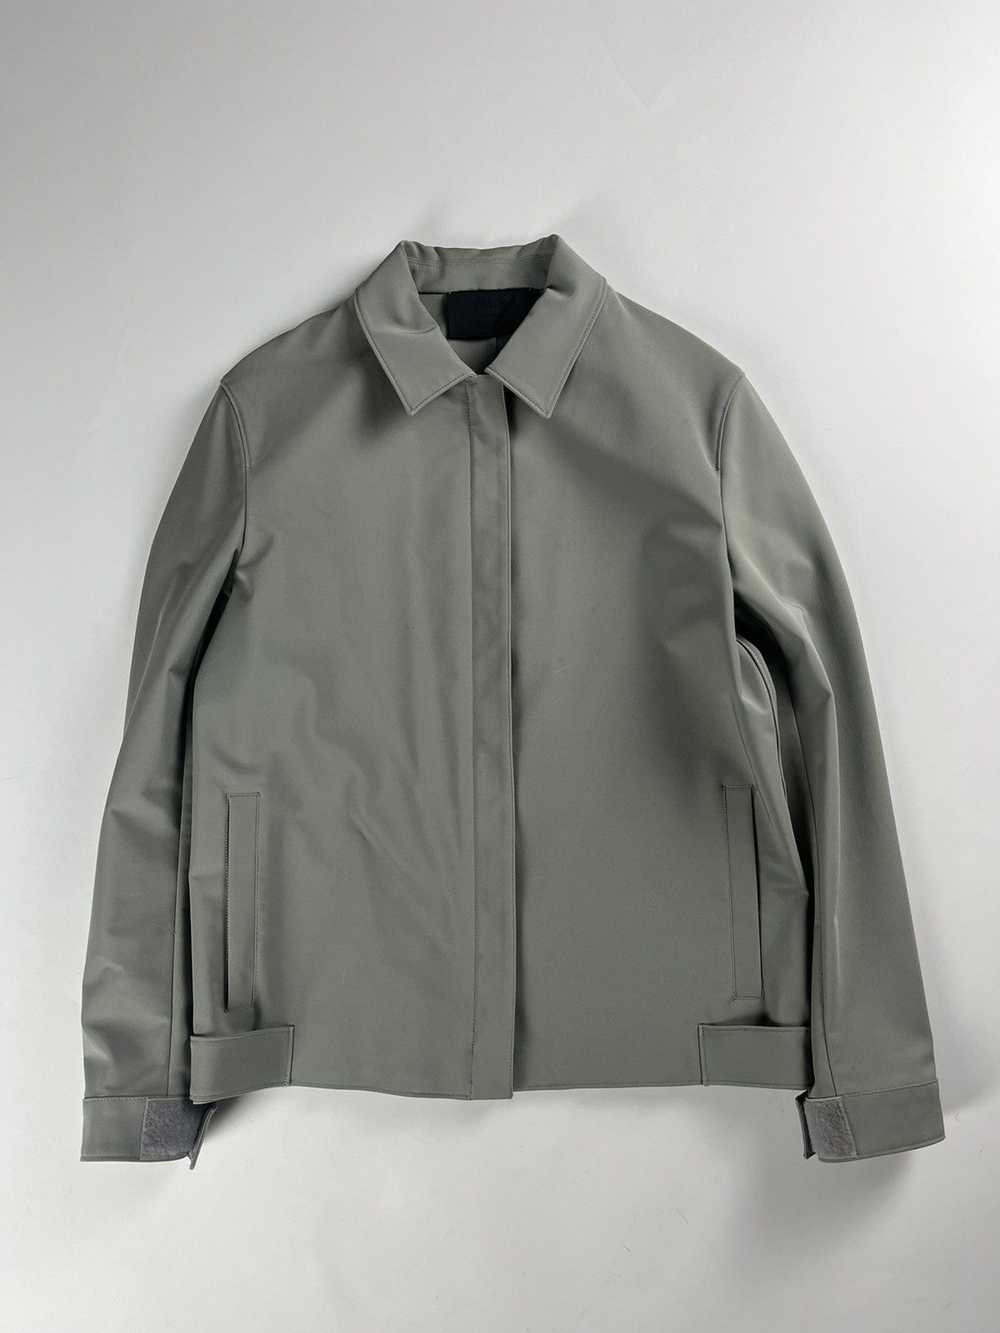 Prada Prada Strapped Nylon Jacket FW 1998 - image 1